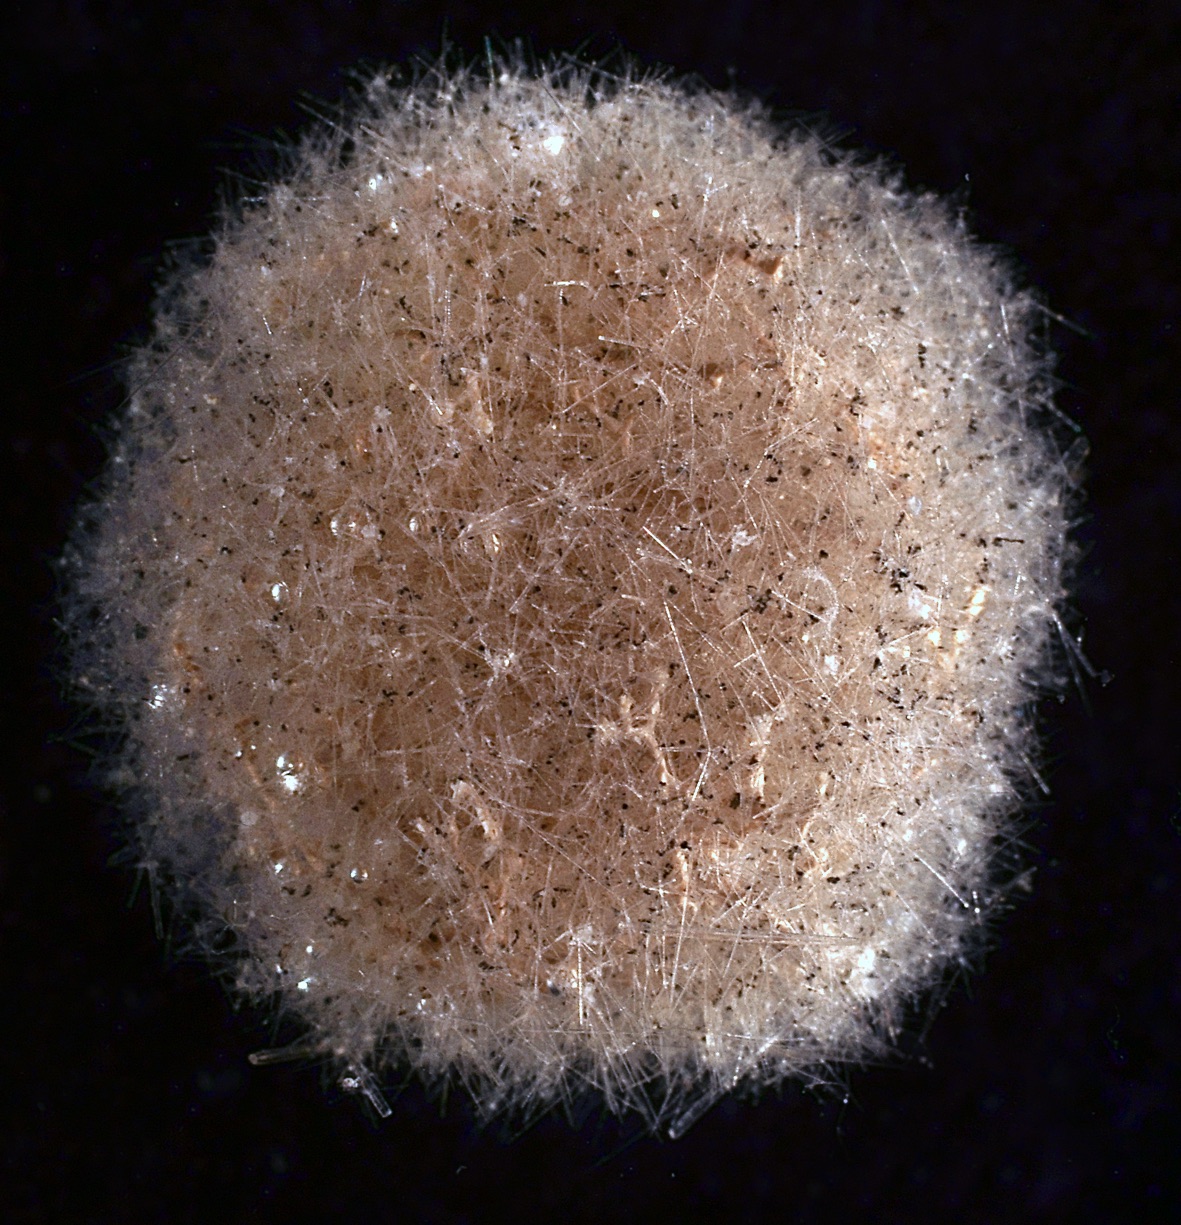 A specimen of Abyssalia, a new genus of Foraminifera. Credit: Slim Chraiti, University of Geneva.